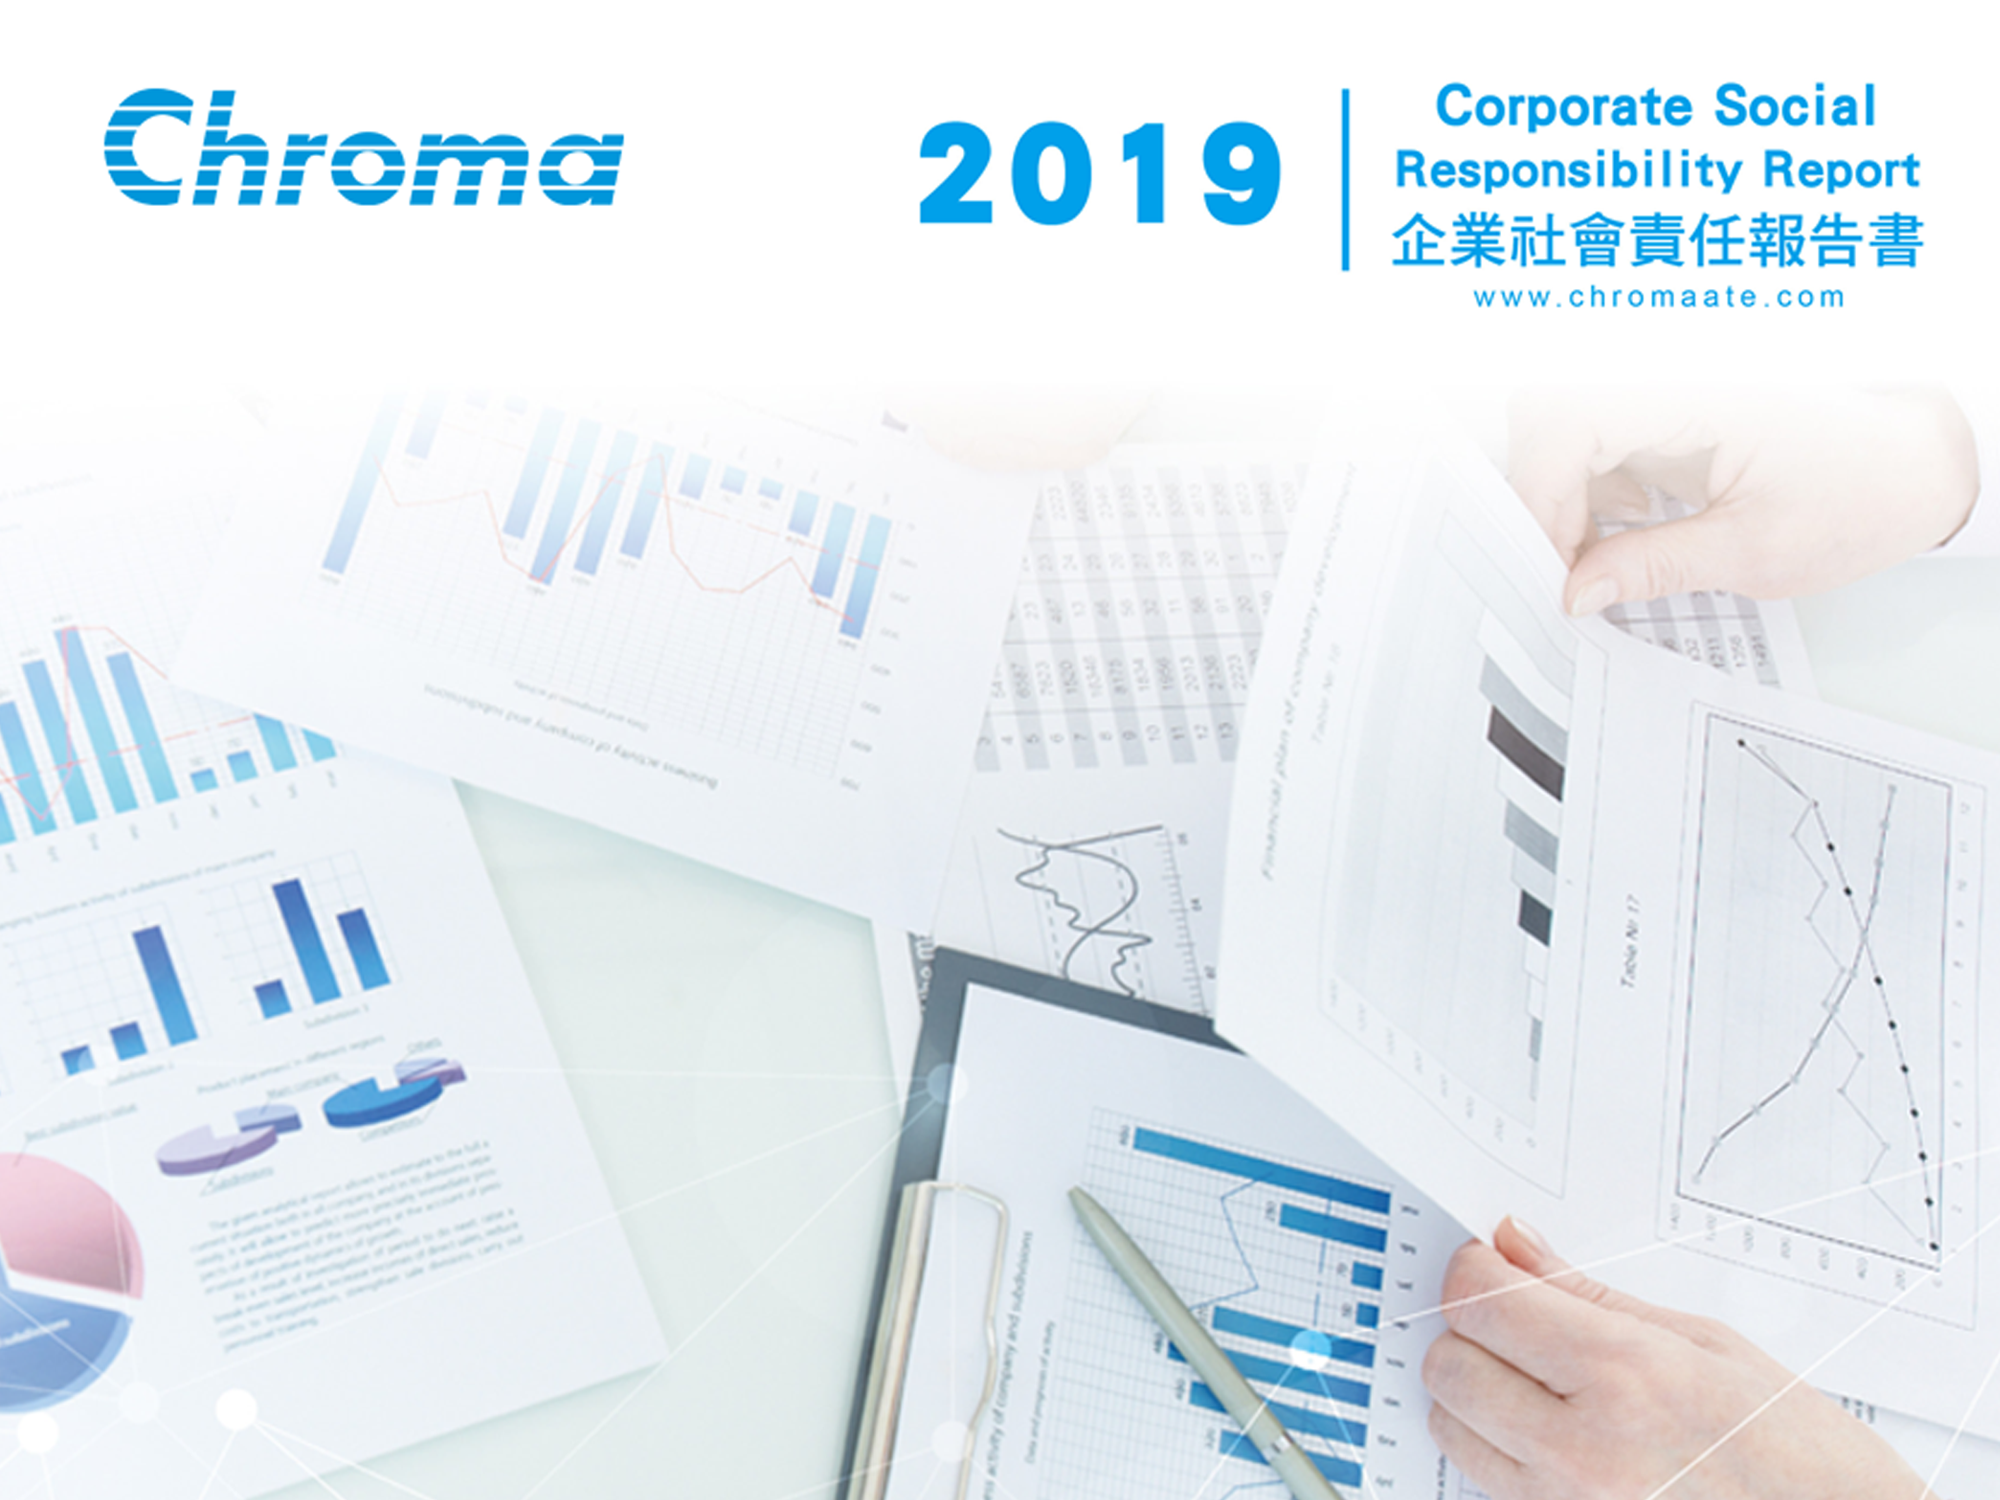 Chroma 2019 CSR Report